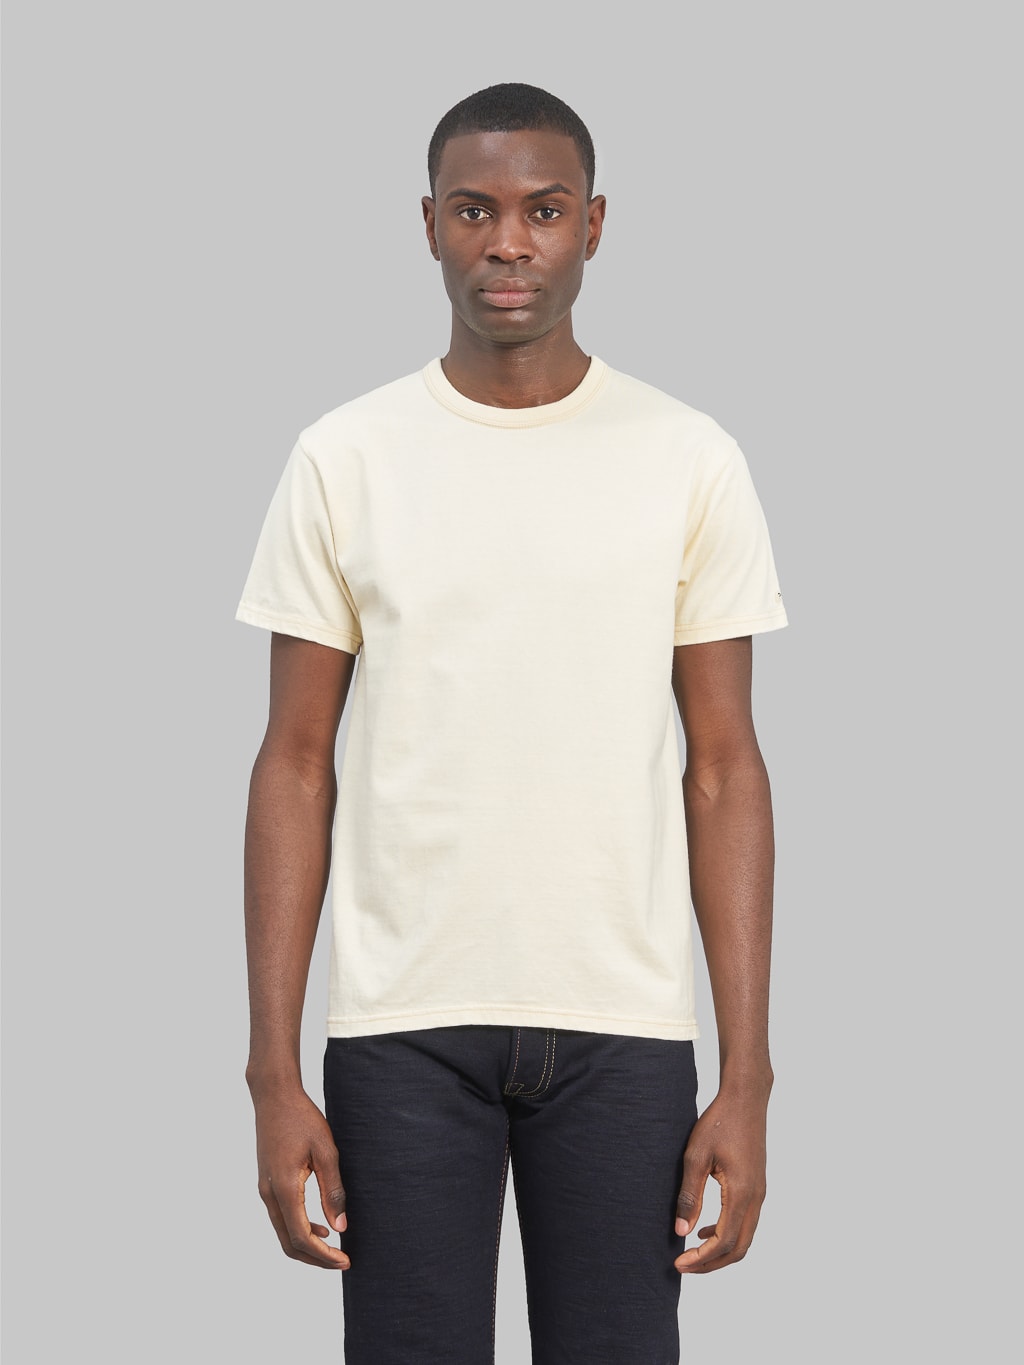 The Flat Head Loopwheeled Heavyweight Plain T-Shirt Ivory